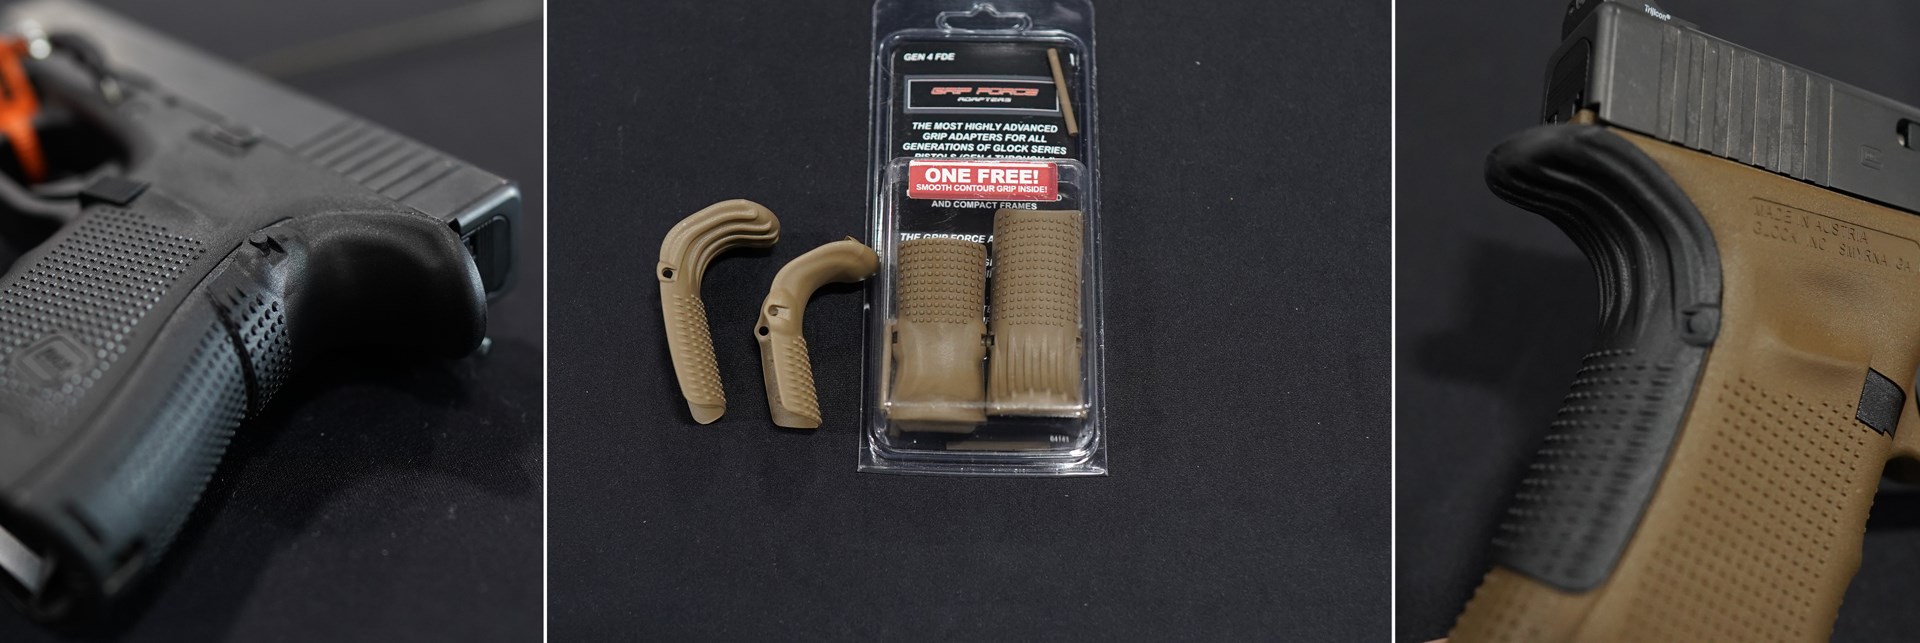 grip force pistol grip adapters for glock guns